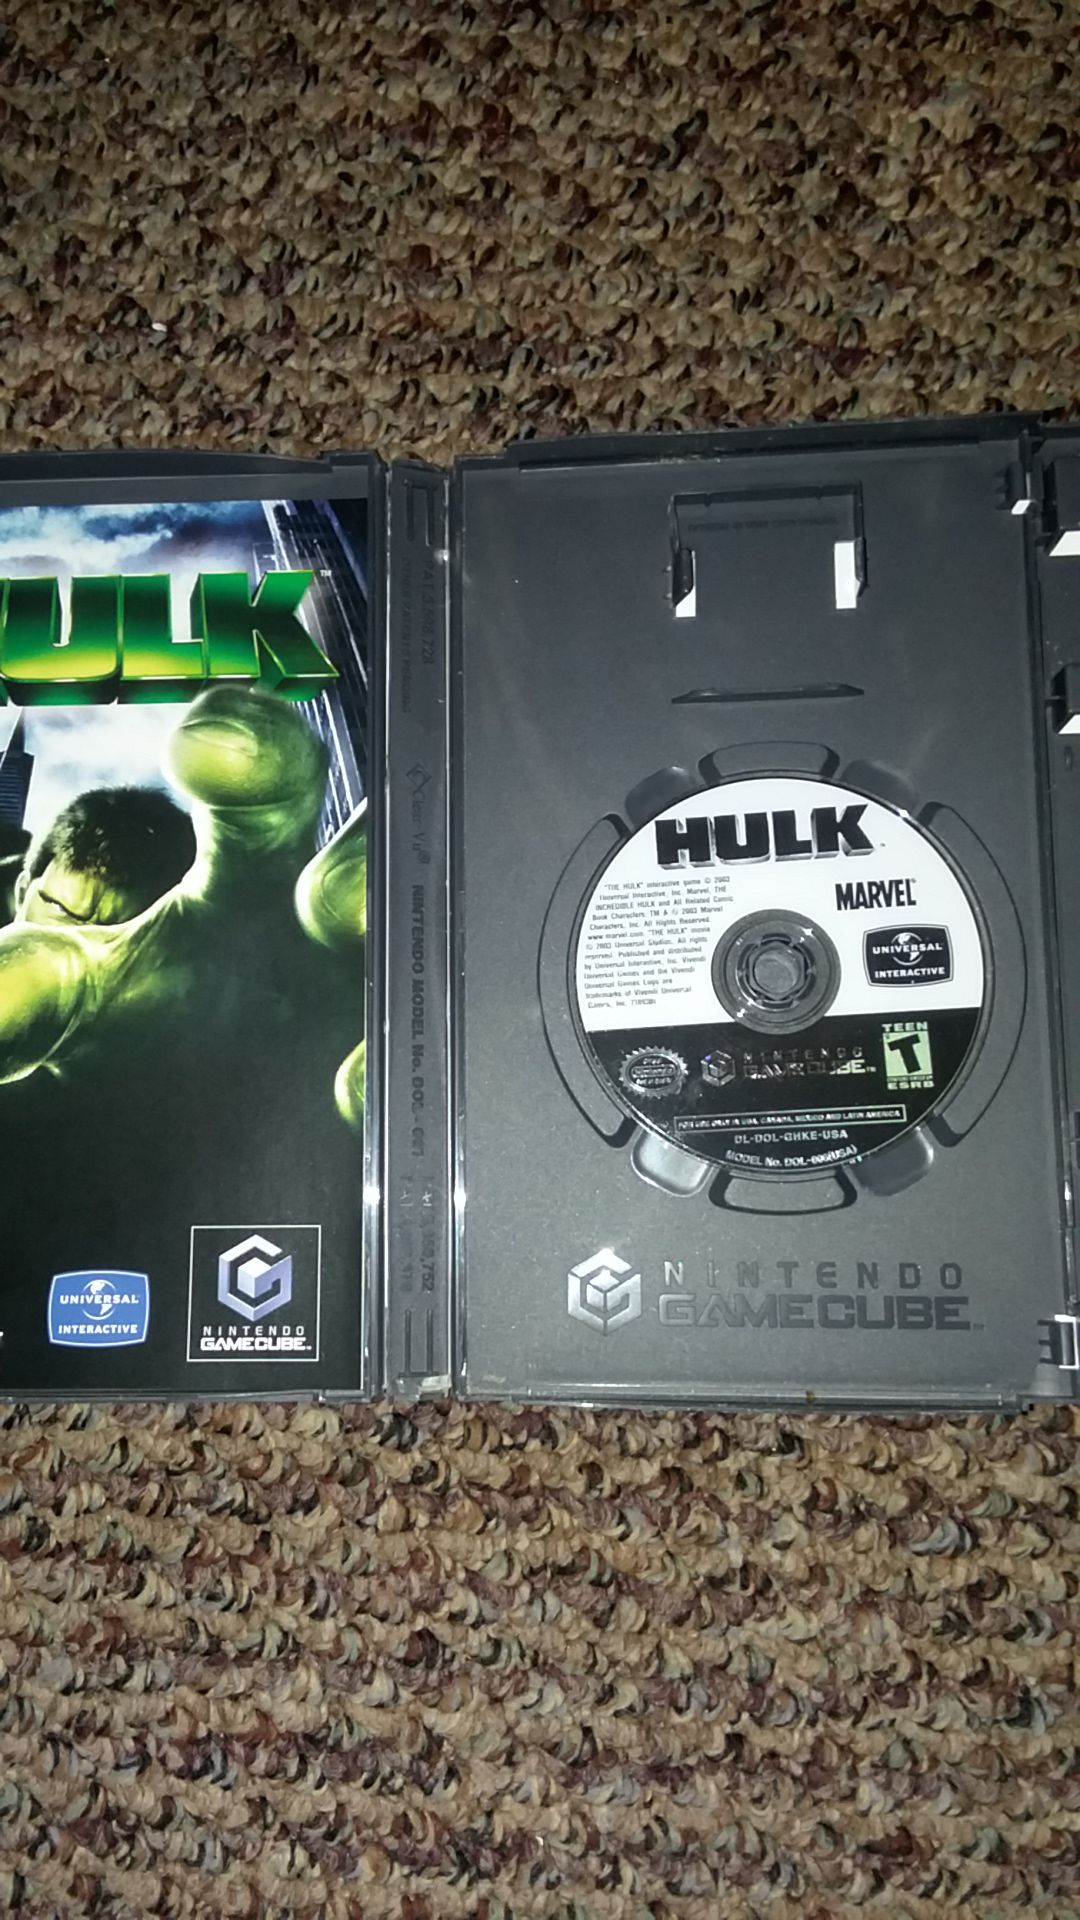 Nintendo GameCube Hulk like new condition only 8$